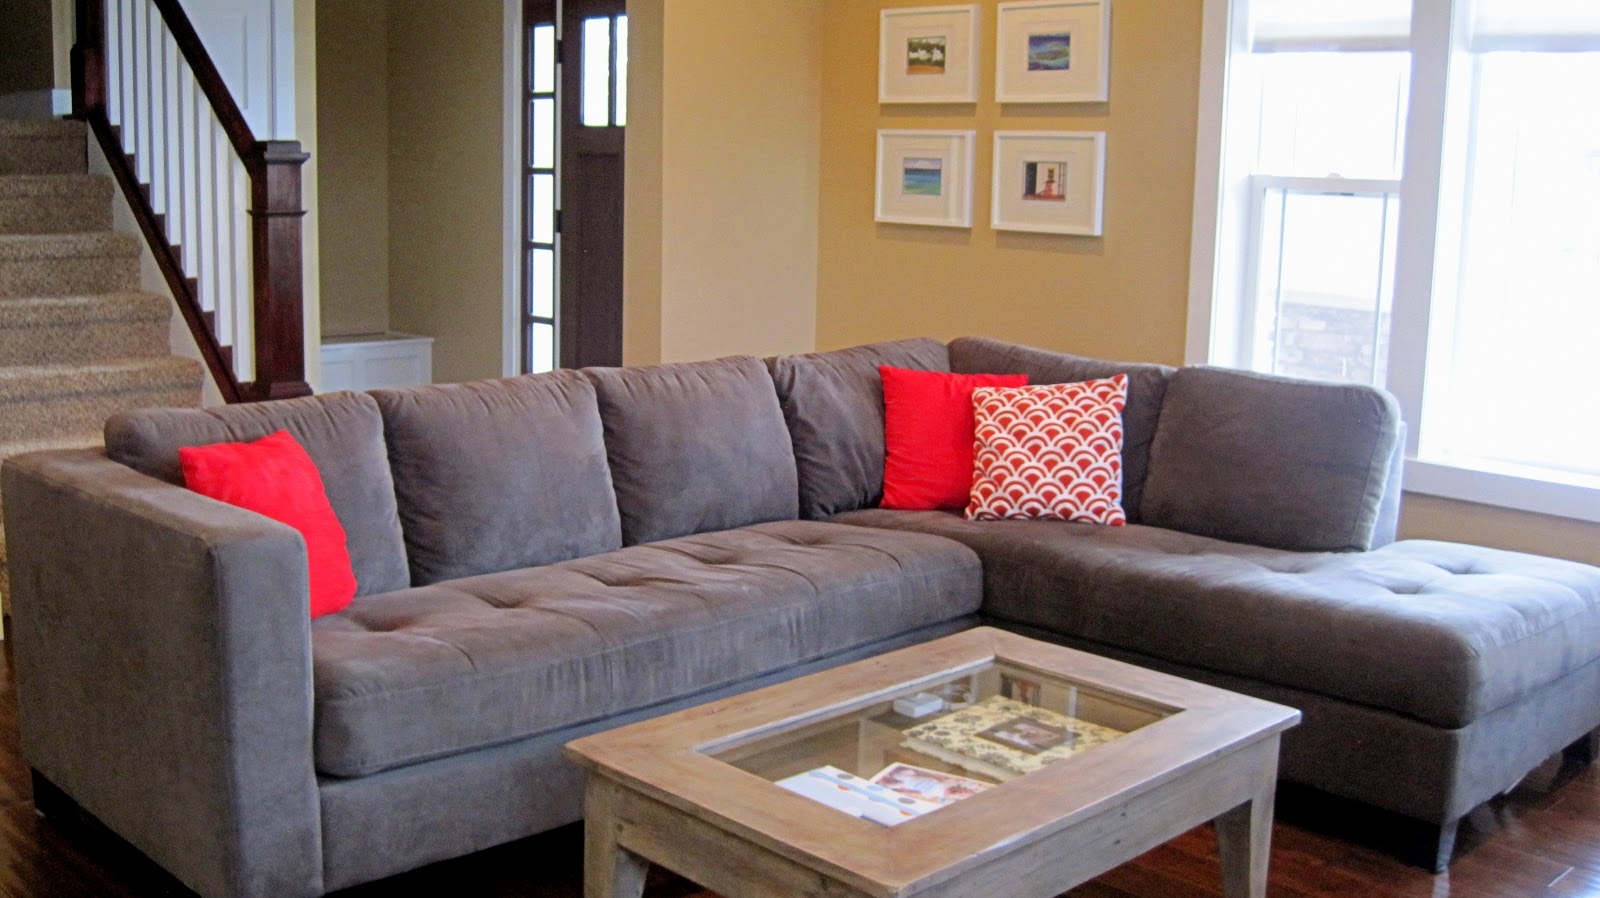 sofa lounge for living room livingroom:home designs chaise lounge chairs for living room ideas with sofa  leather ALOJCZQ